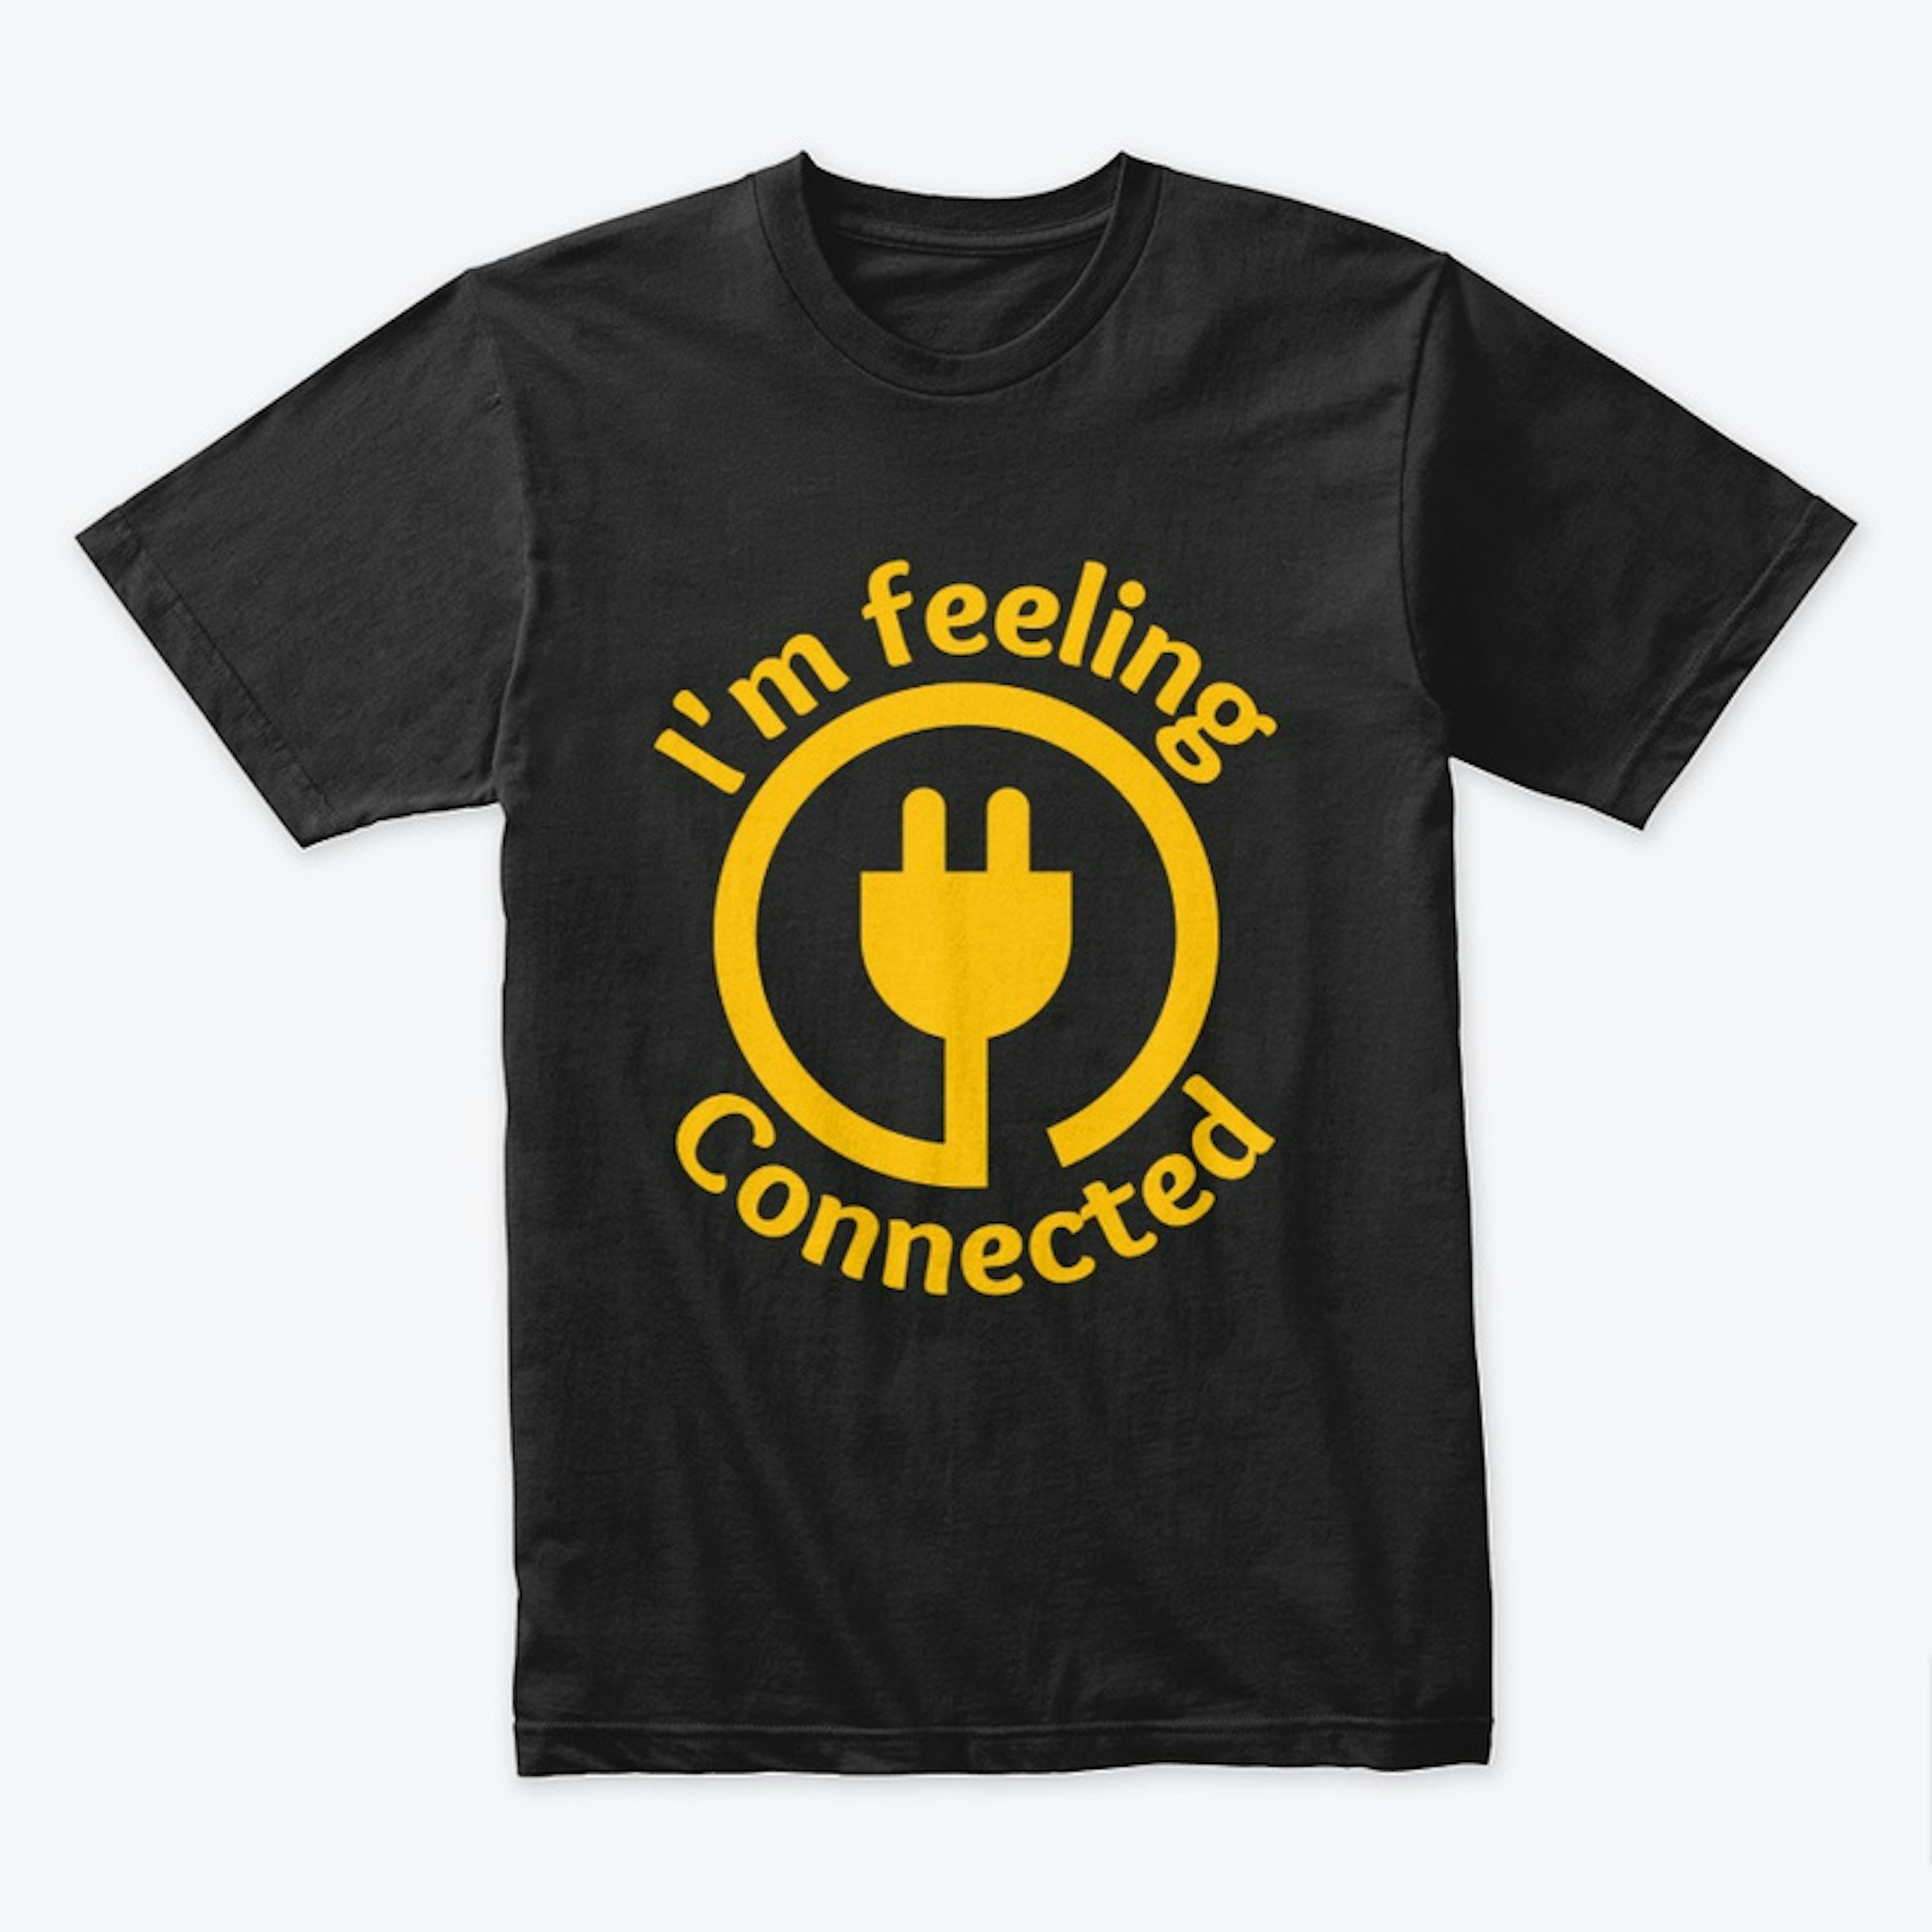 I'm feeling connected (dark)